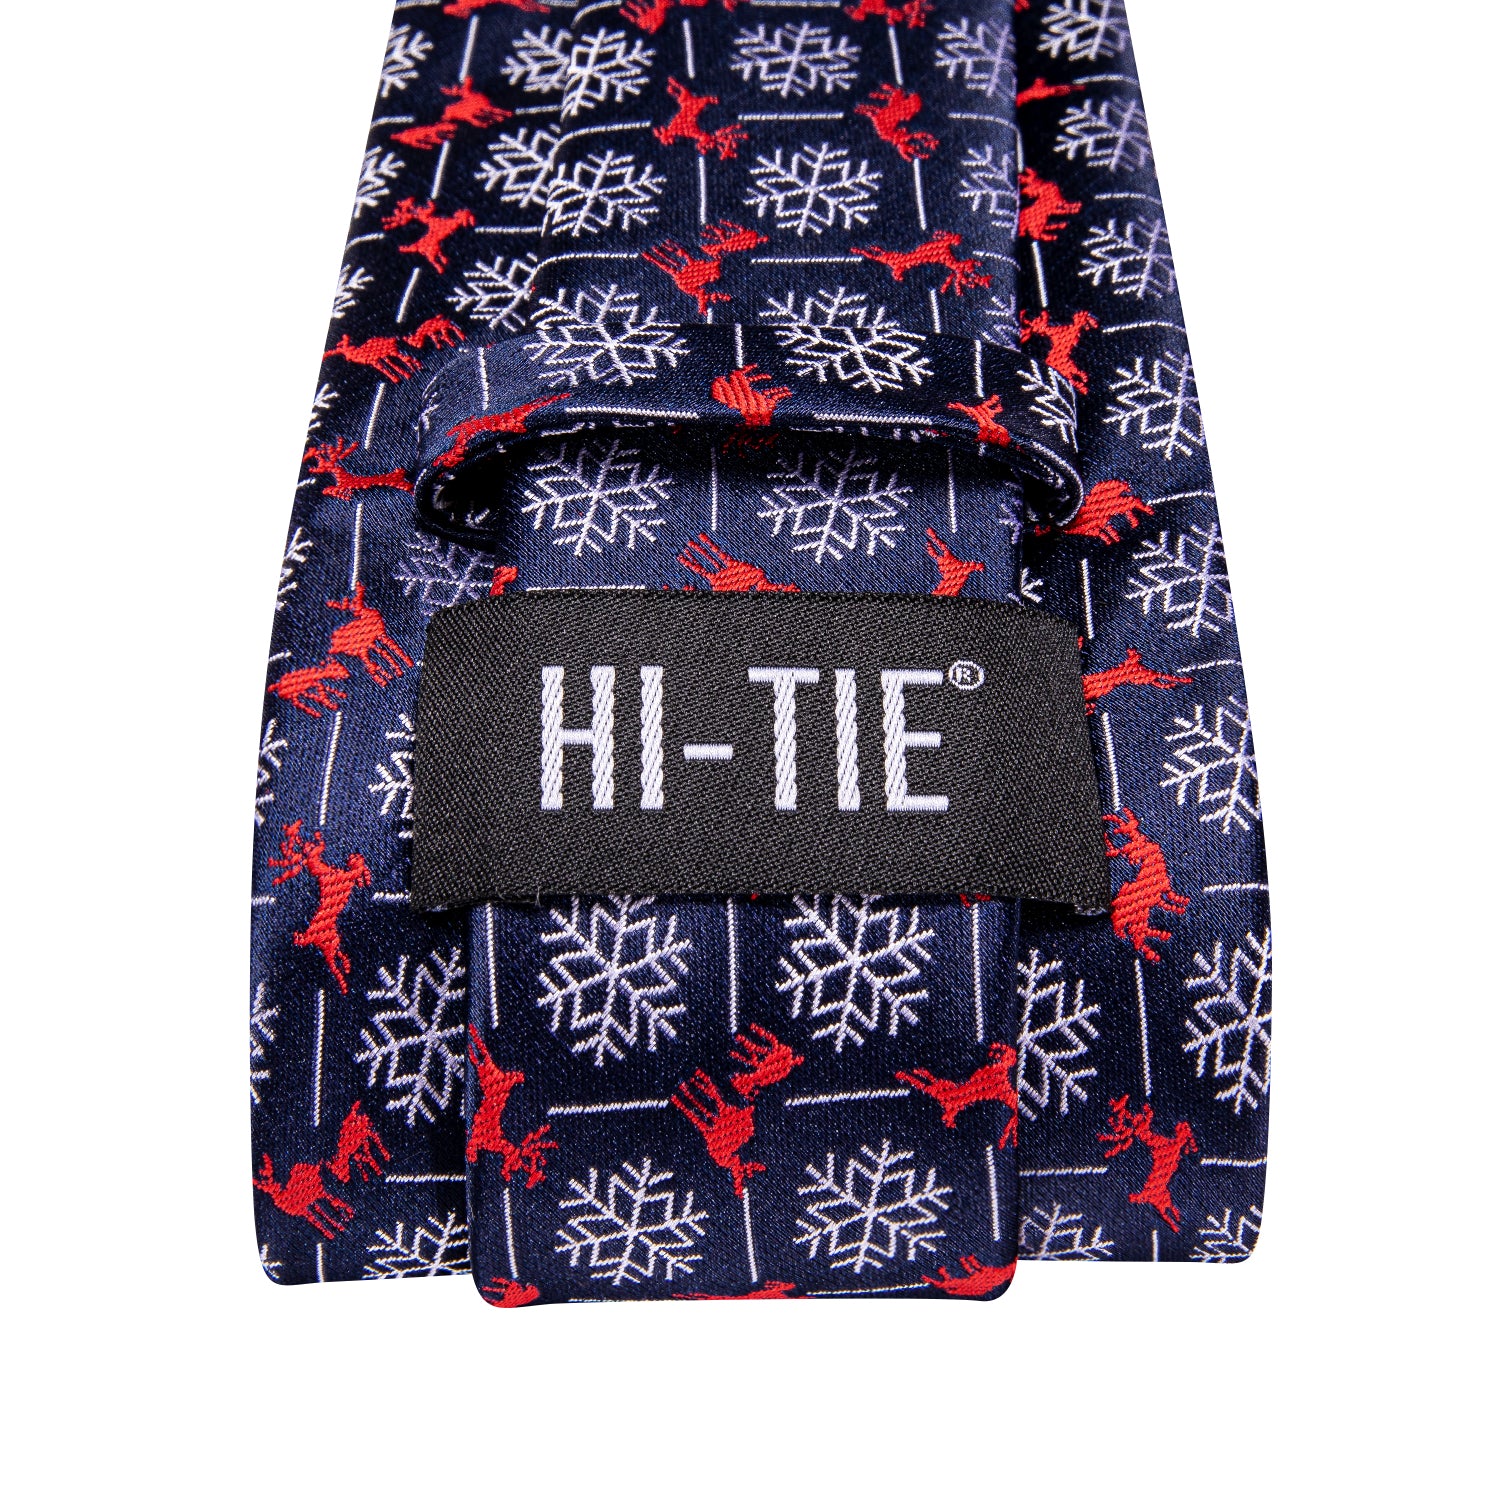 Christmas Blue White Snowflakes Men's Tie Pocket Square Cufflinks Set